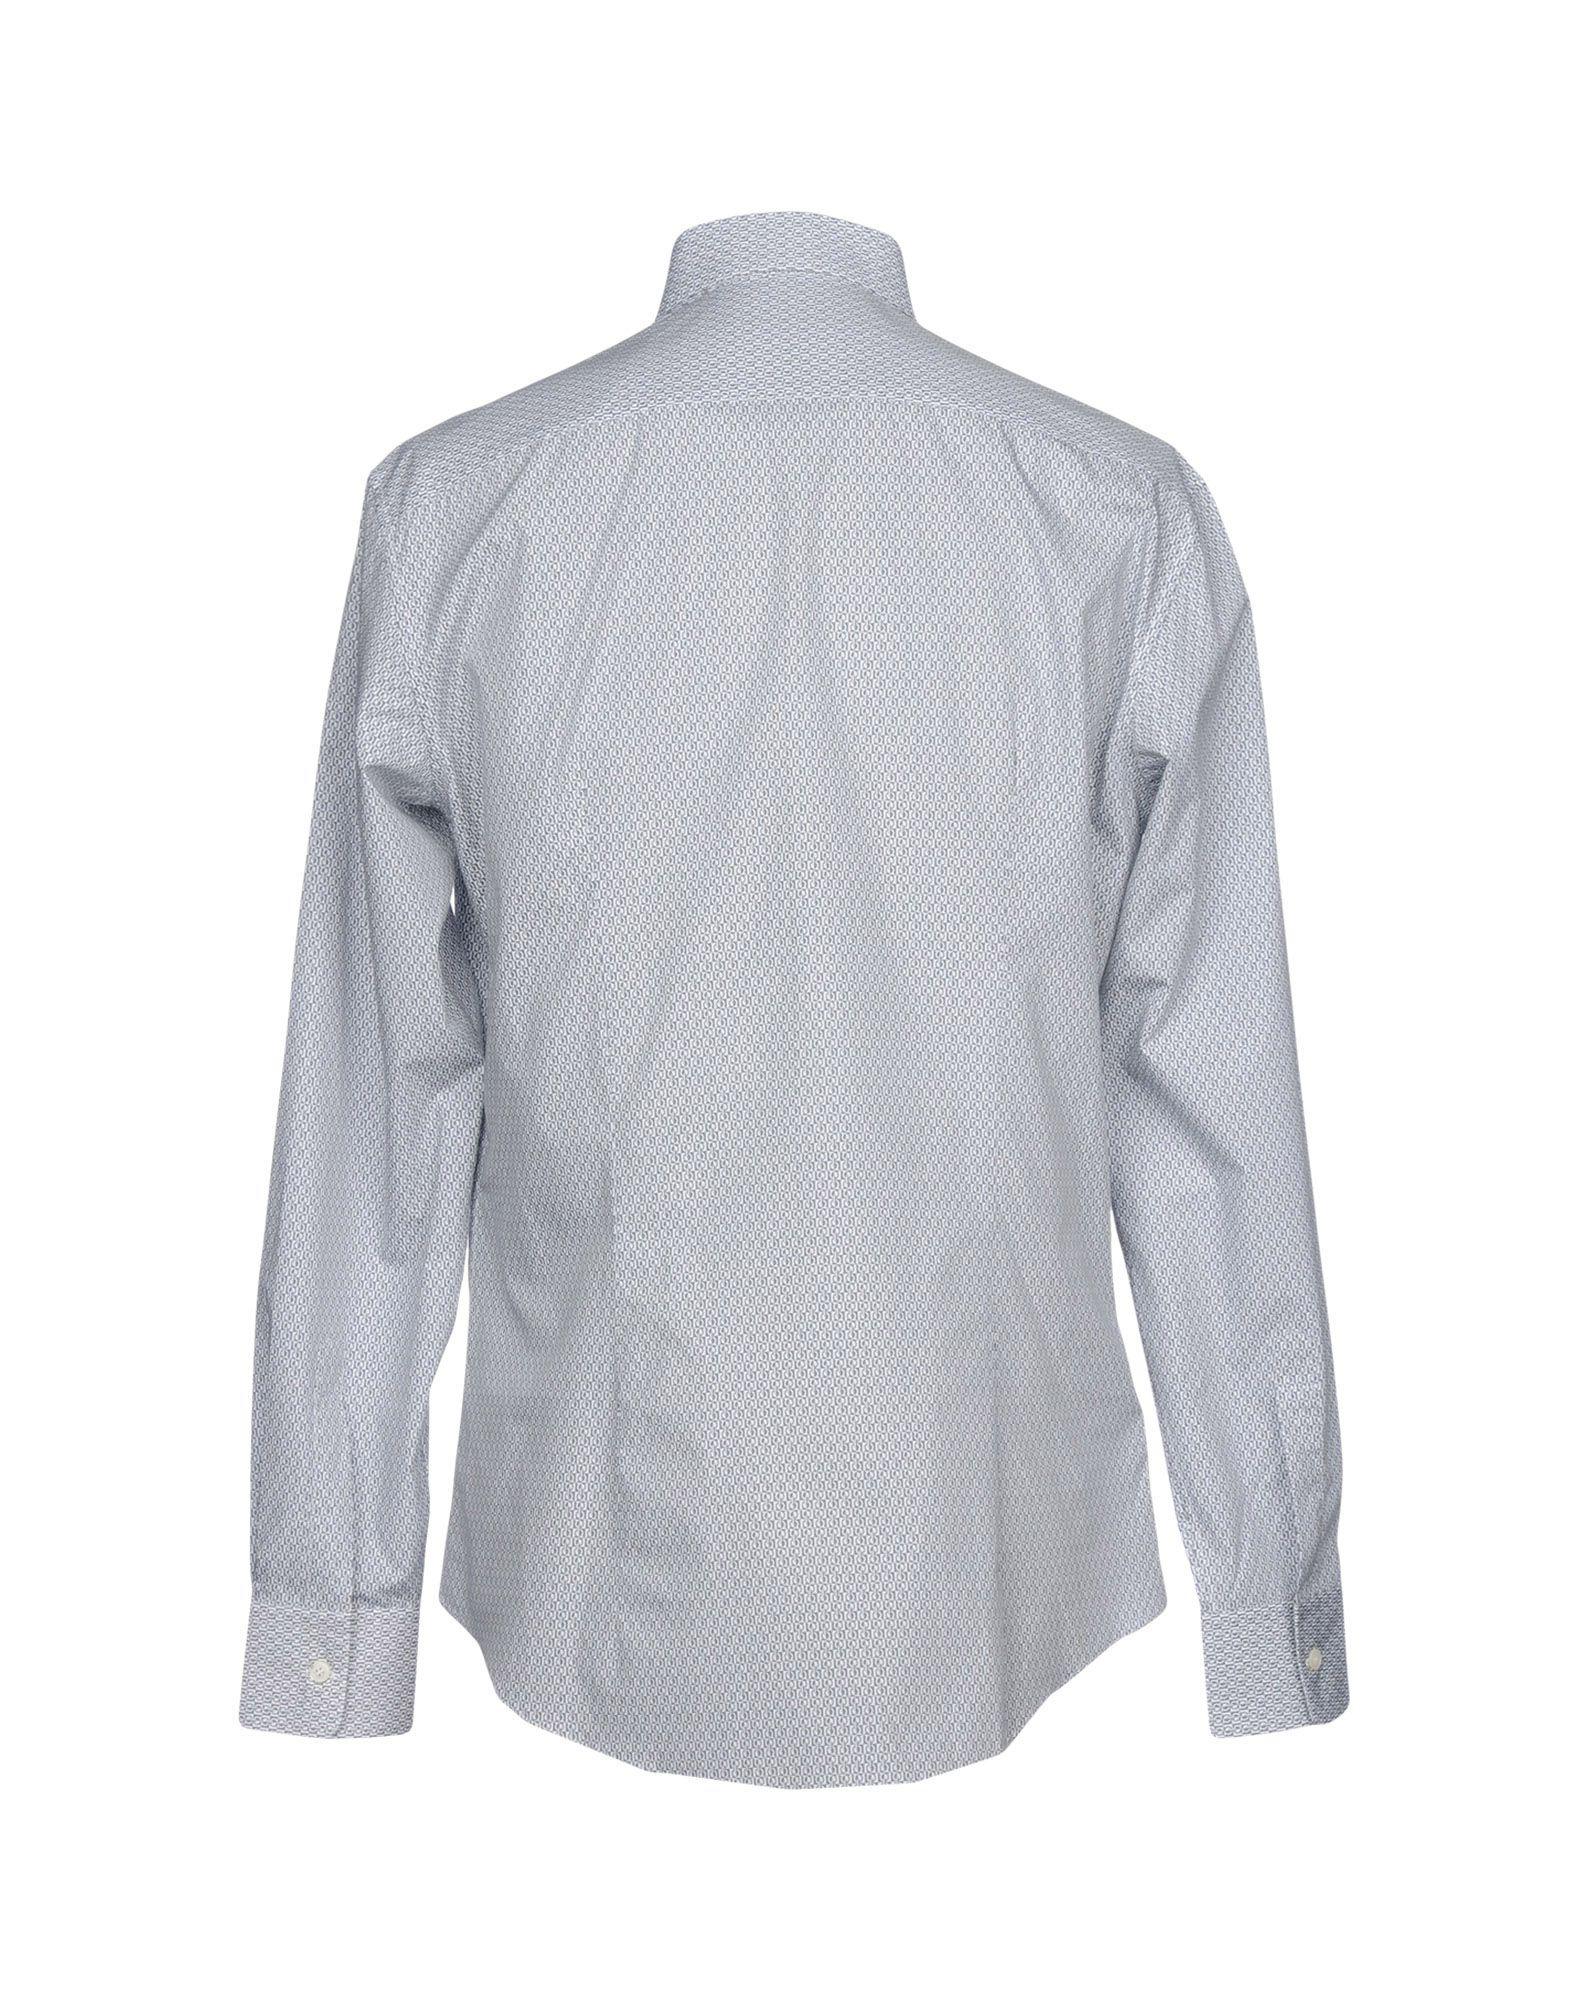 Ferragamo Cotton Shirt in White for Men - Lyst